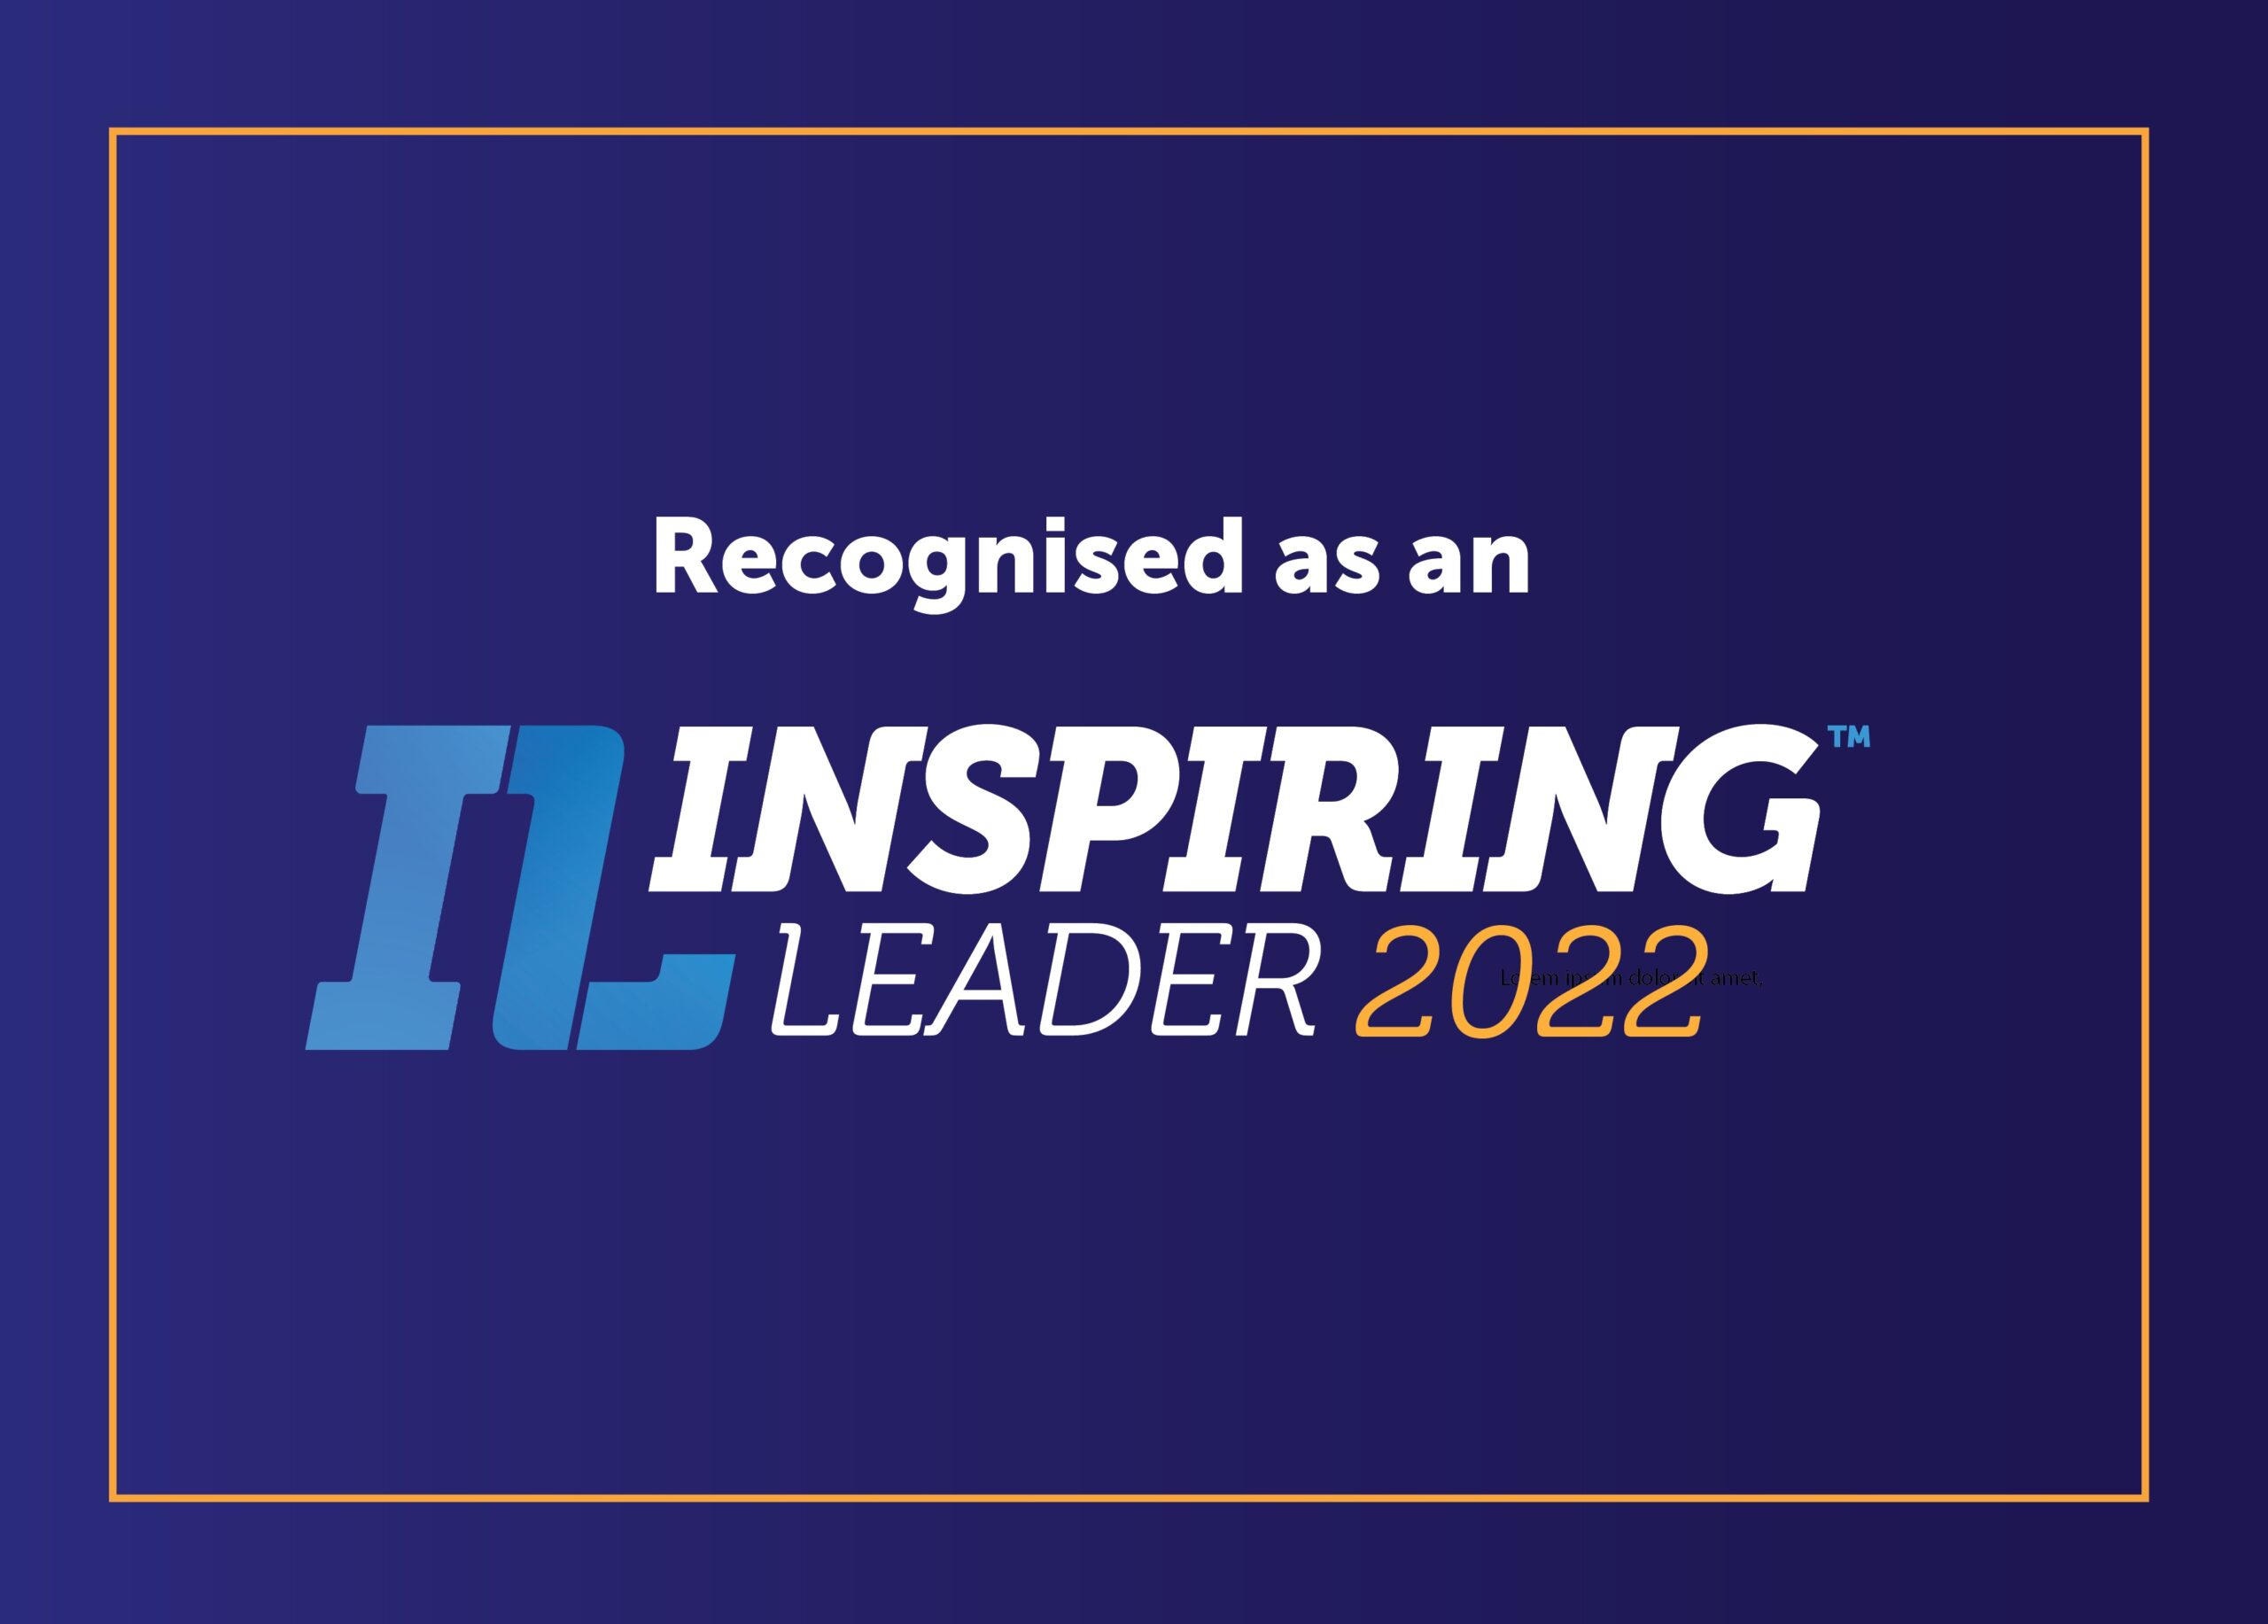 Inspiring Leaders for 2022 announced